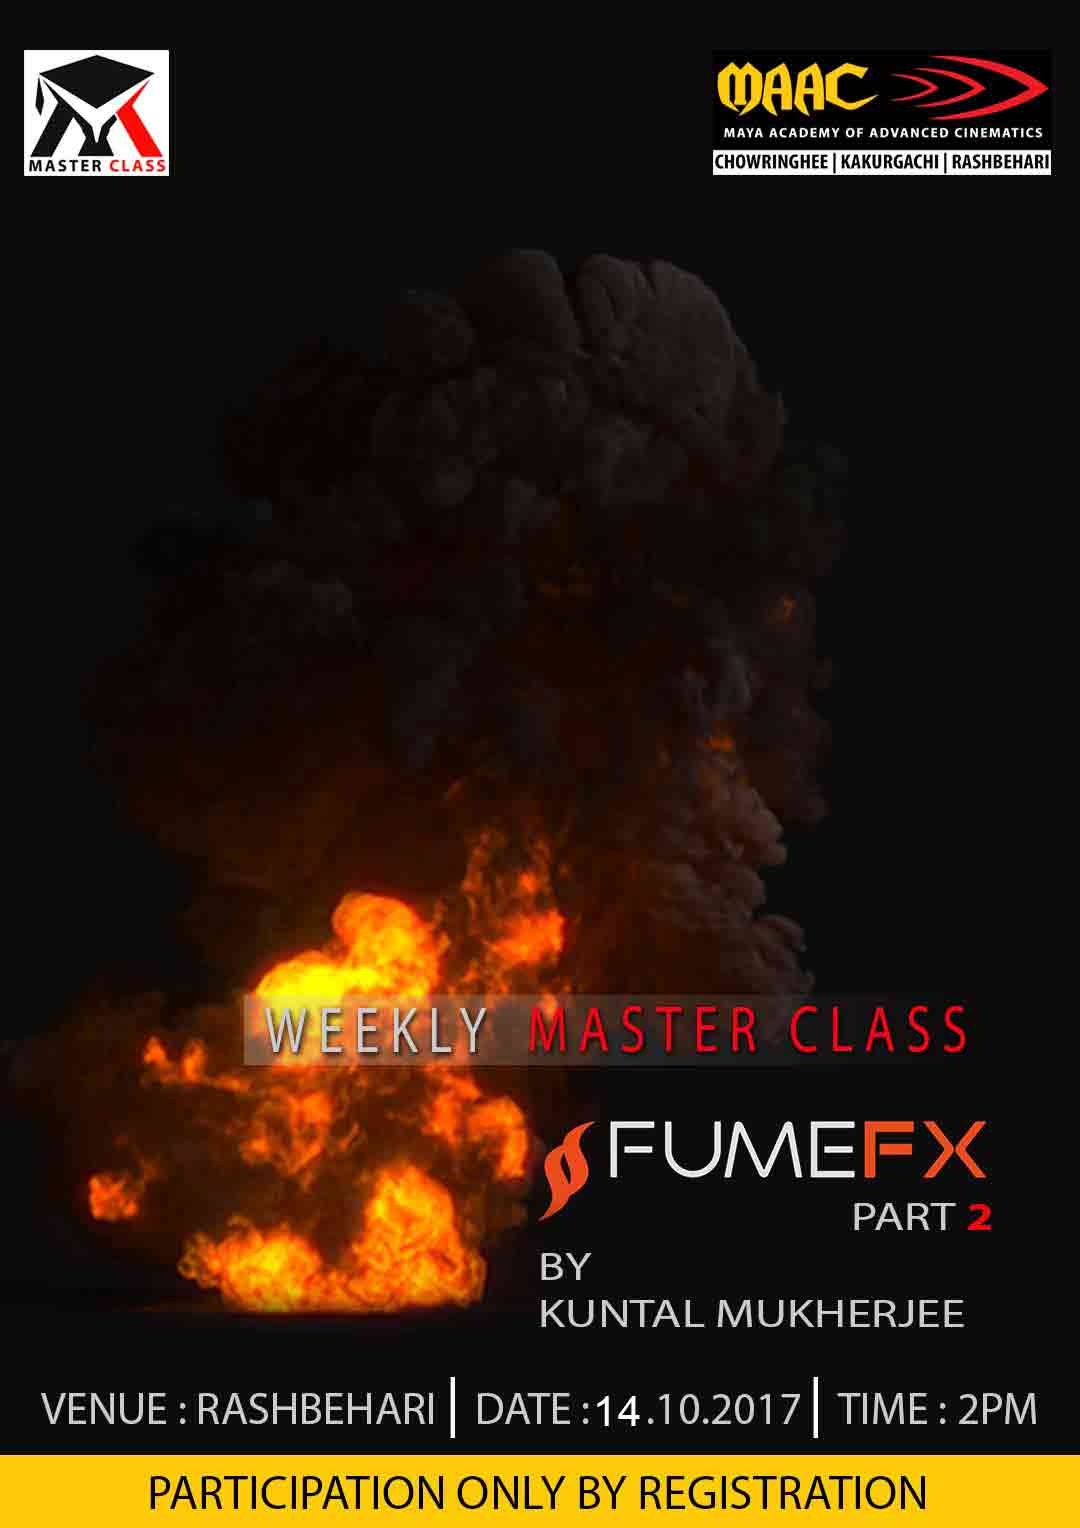 Weekly Master Class on FUMEFX PART-2 - KUNTAL MUKHERJEE